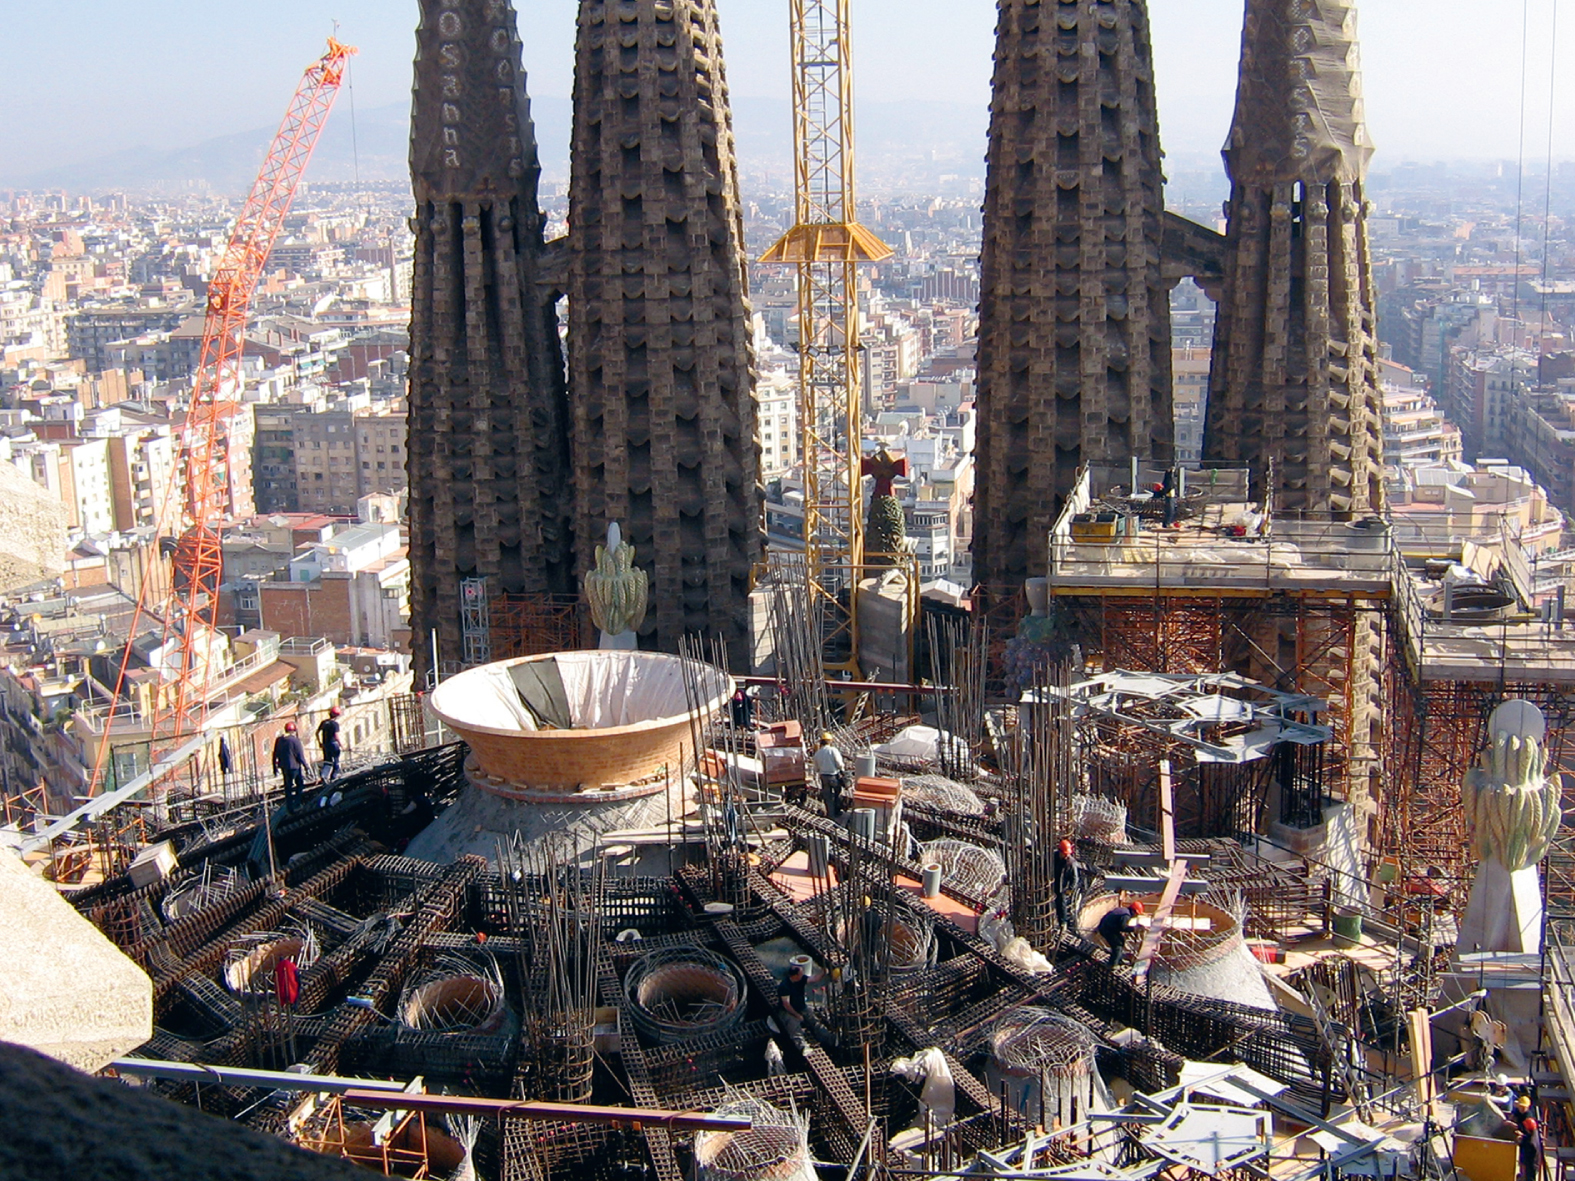 Example of a complex formwork – La Sagrada Família, Antoni Gaudí, Barcelona.